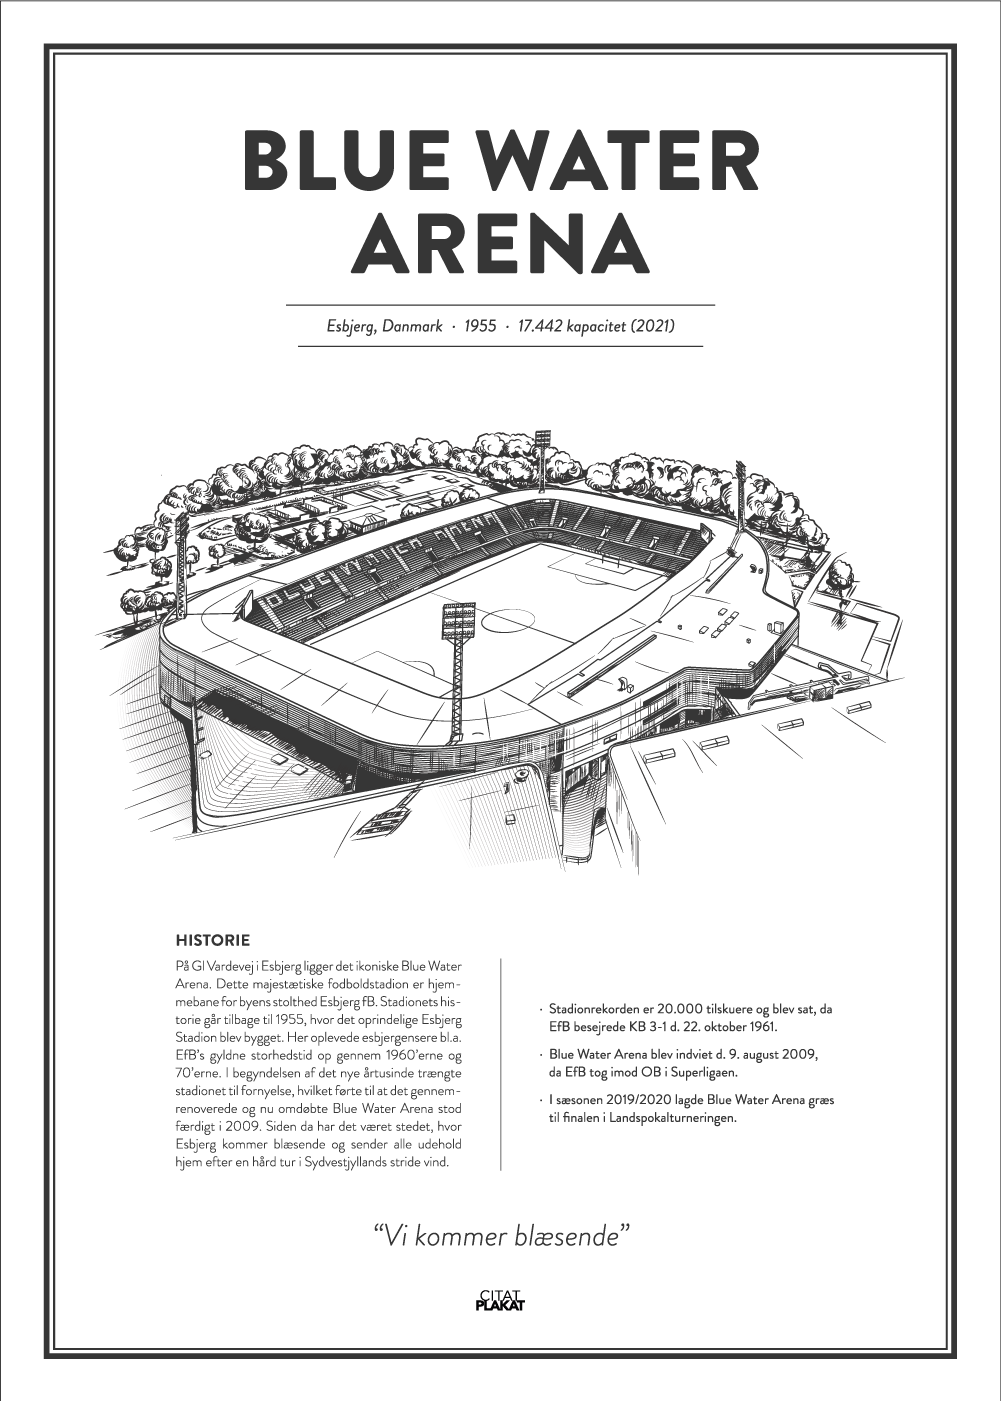 elev volleyball Parlament Plakat | Blue Water Arena - Esbjerg fB arena | Stadion | Fodboldplakat